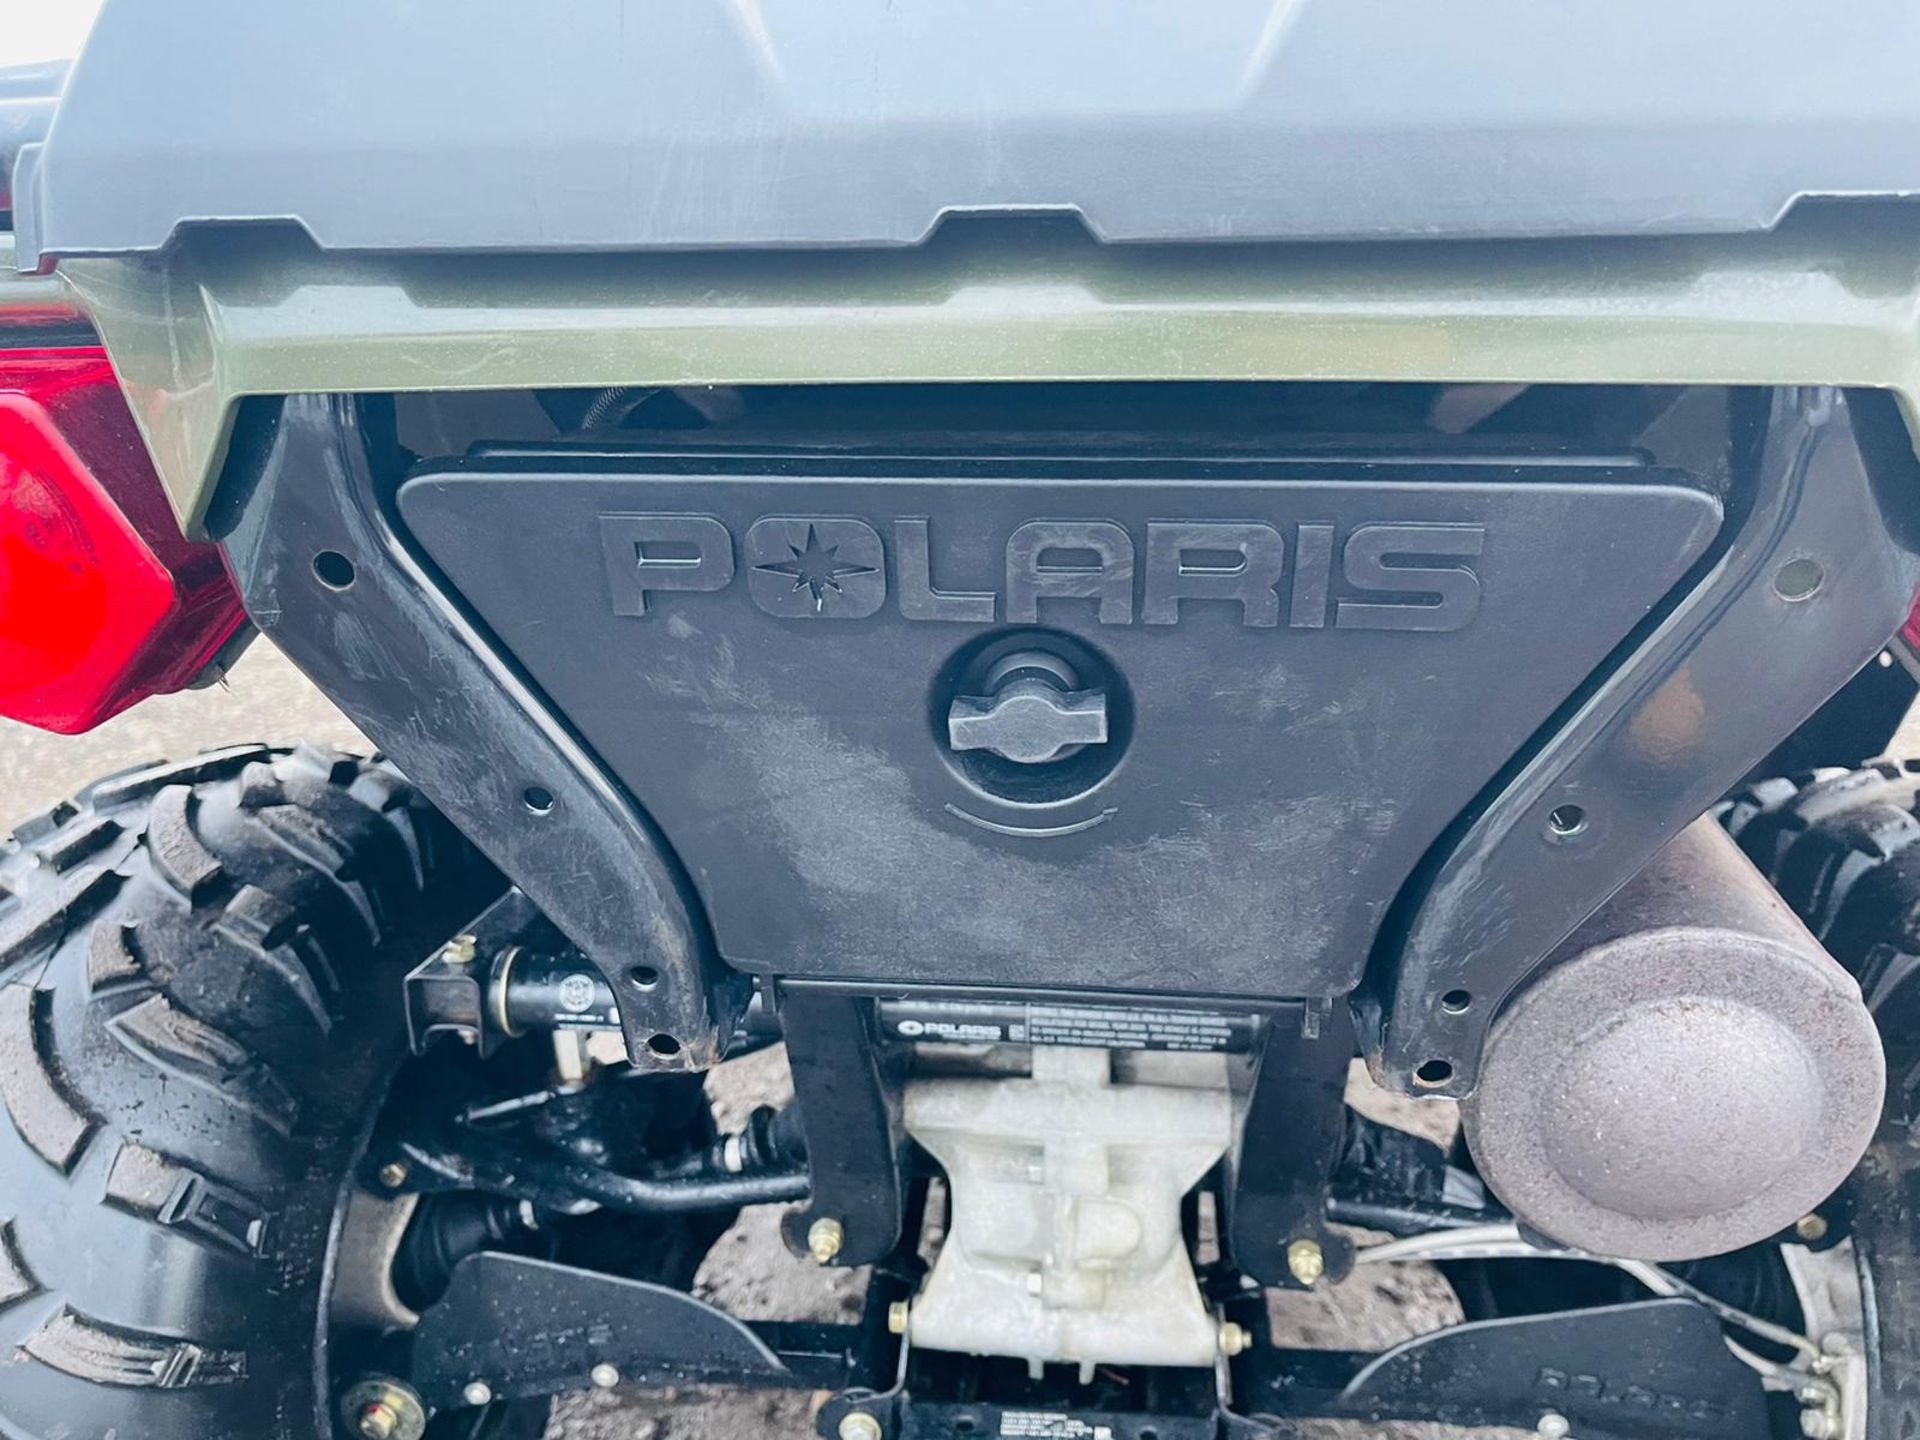 Polaris Sportsman 450 H.O EFI '2020 Year' 4WD - ATV QuadBike - Low Mileage - Image 28 of 29